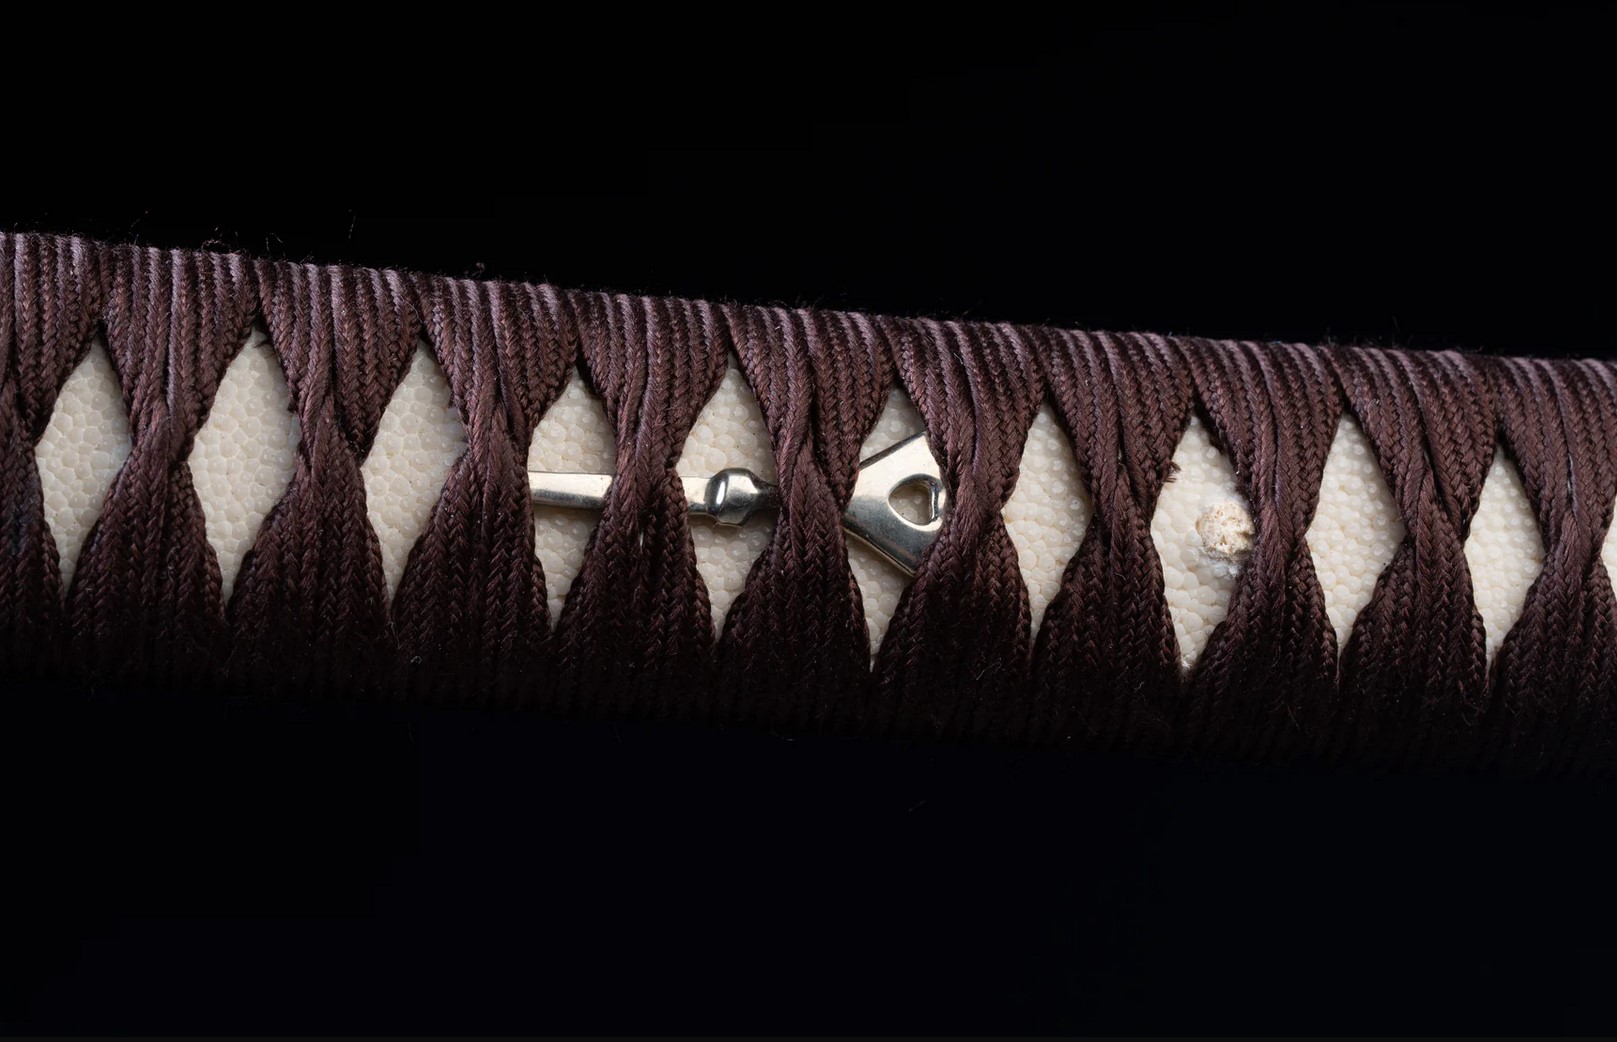 Amourer's Katana, 73,66 cm Klingenlänge, 30,48 cm Grifflänge